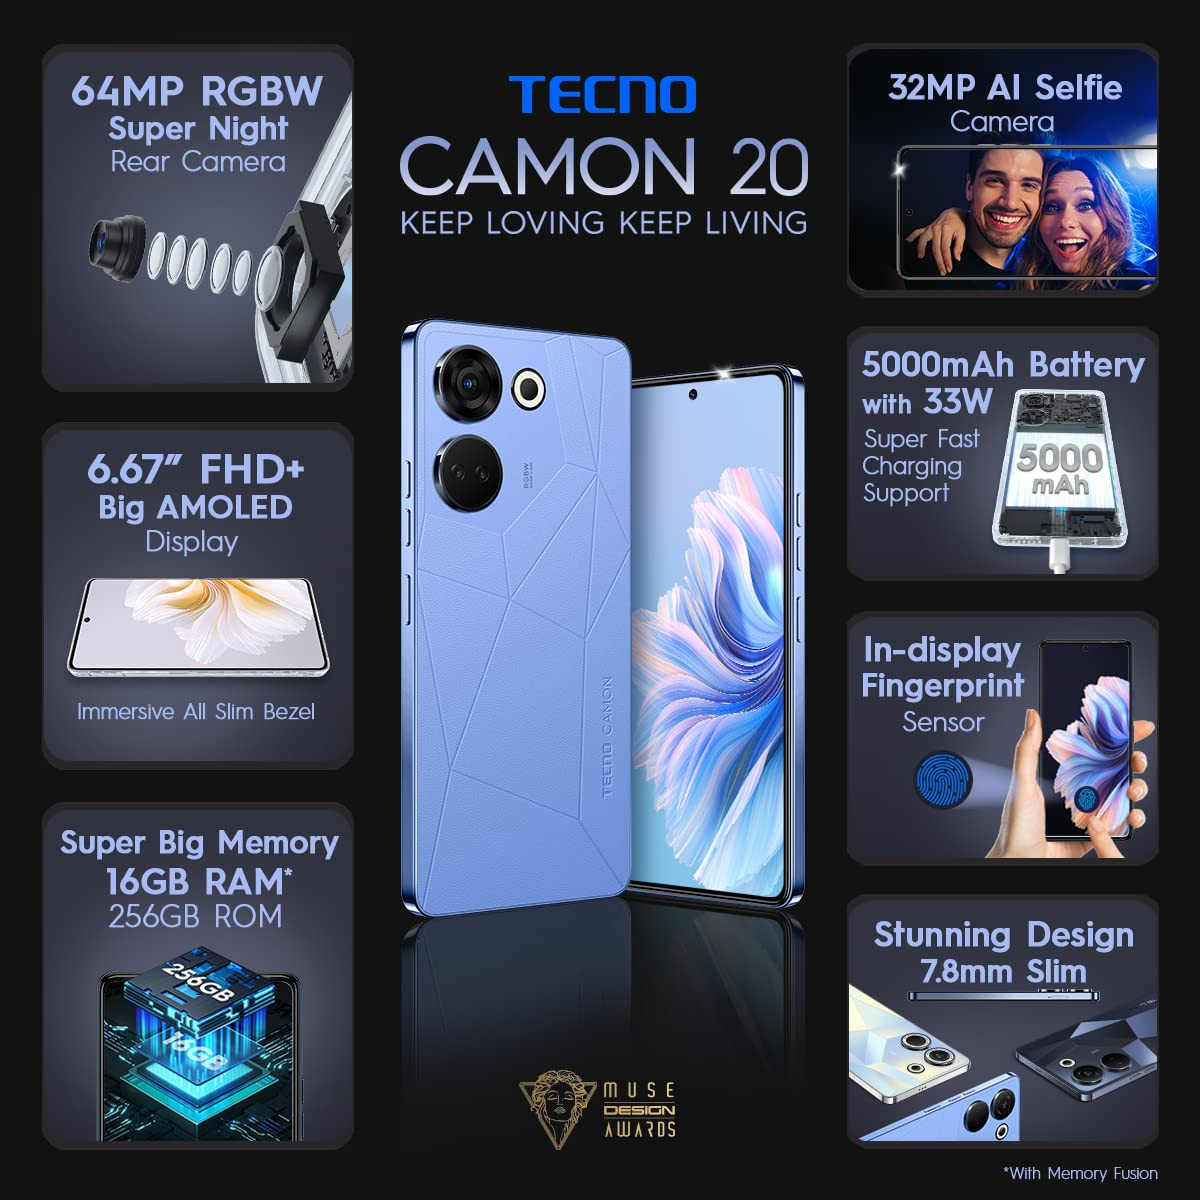 TECNO Camon 20 Art Edition 8GB RAM256GB Storage16GB Expandable RAM  64MP RGBW Rear Camera667 FHD Big AMOLED with in-Display Fingerprint Sensor